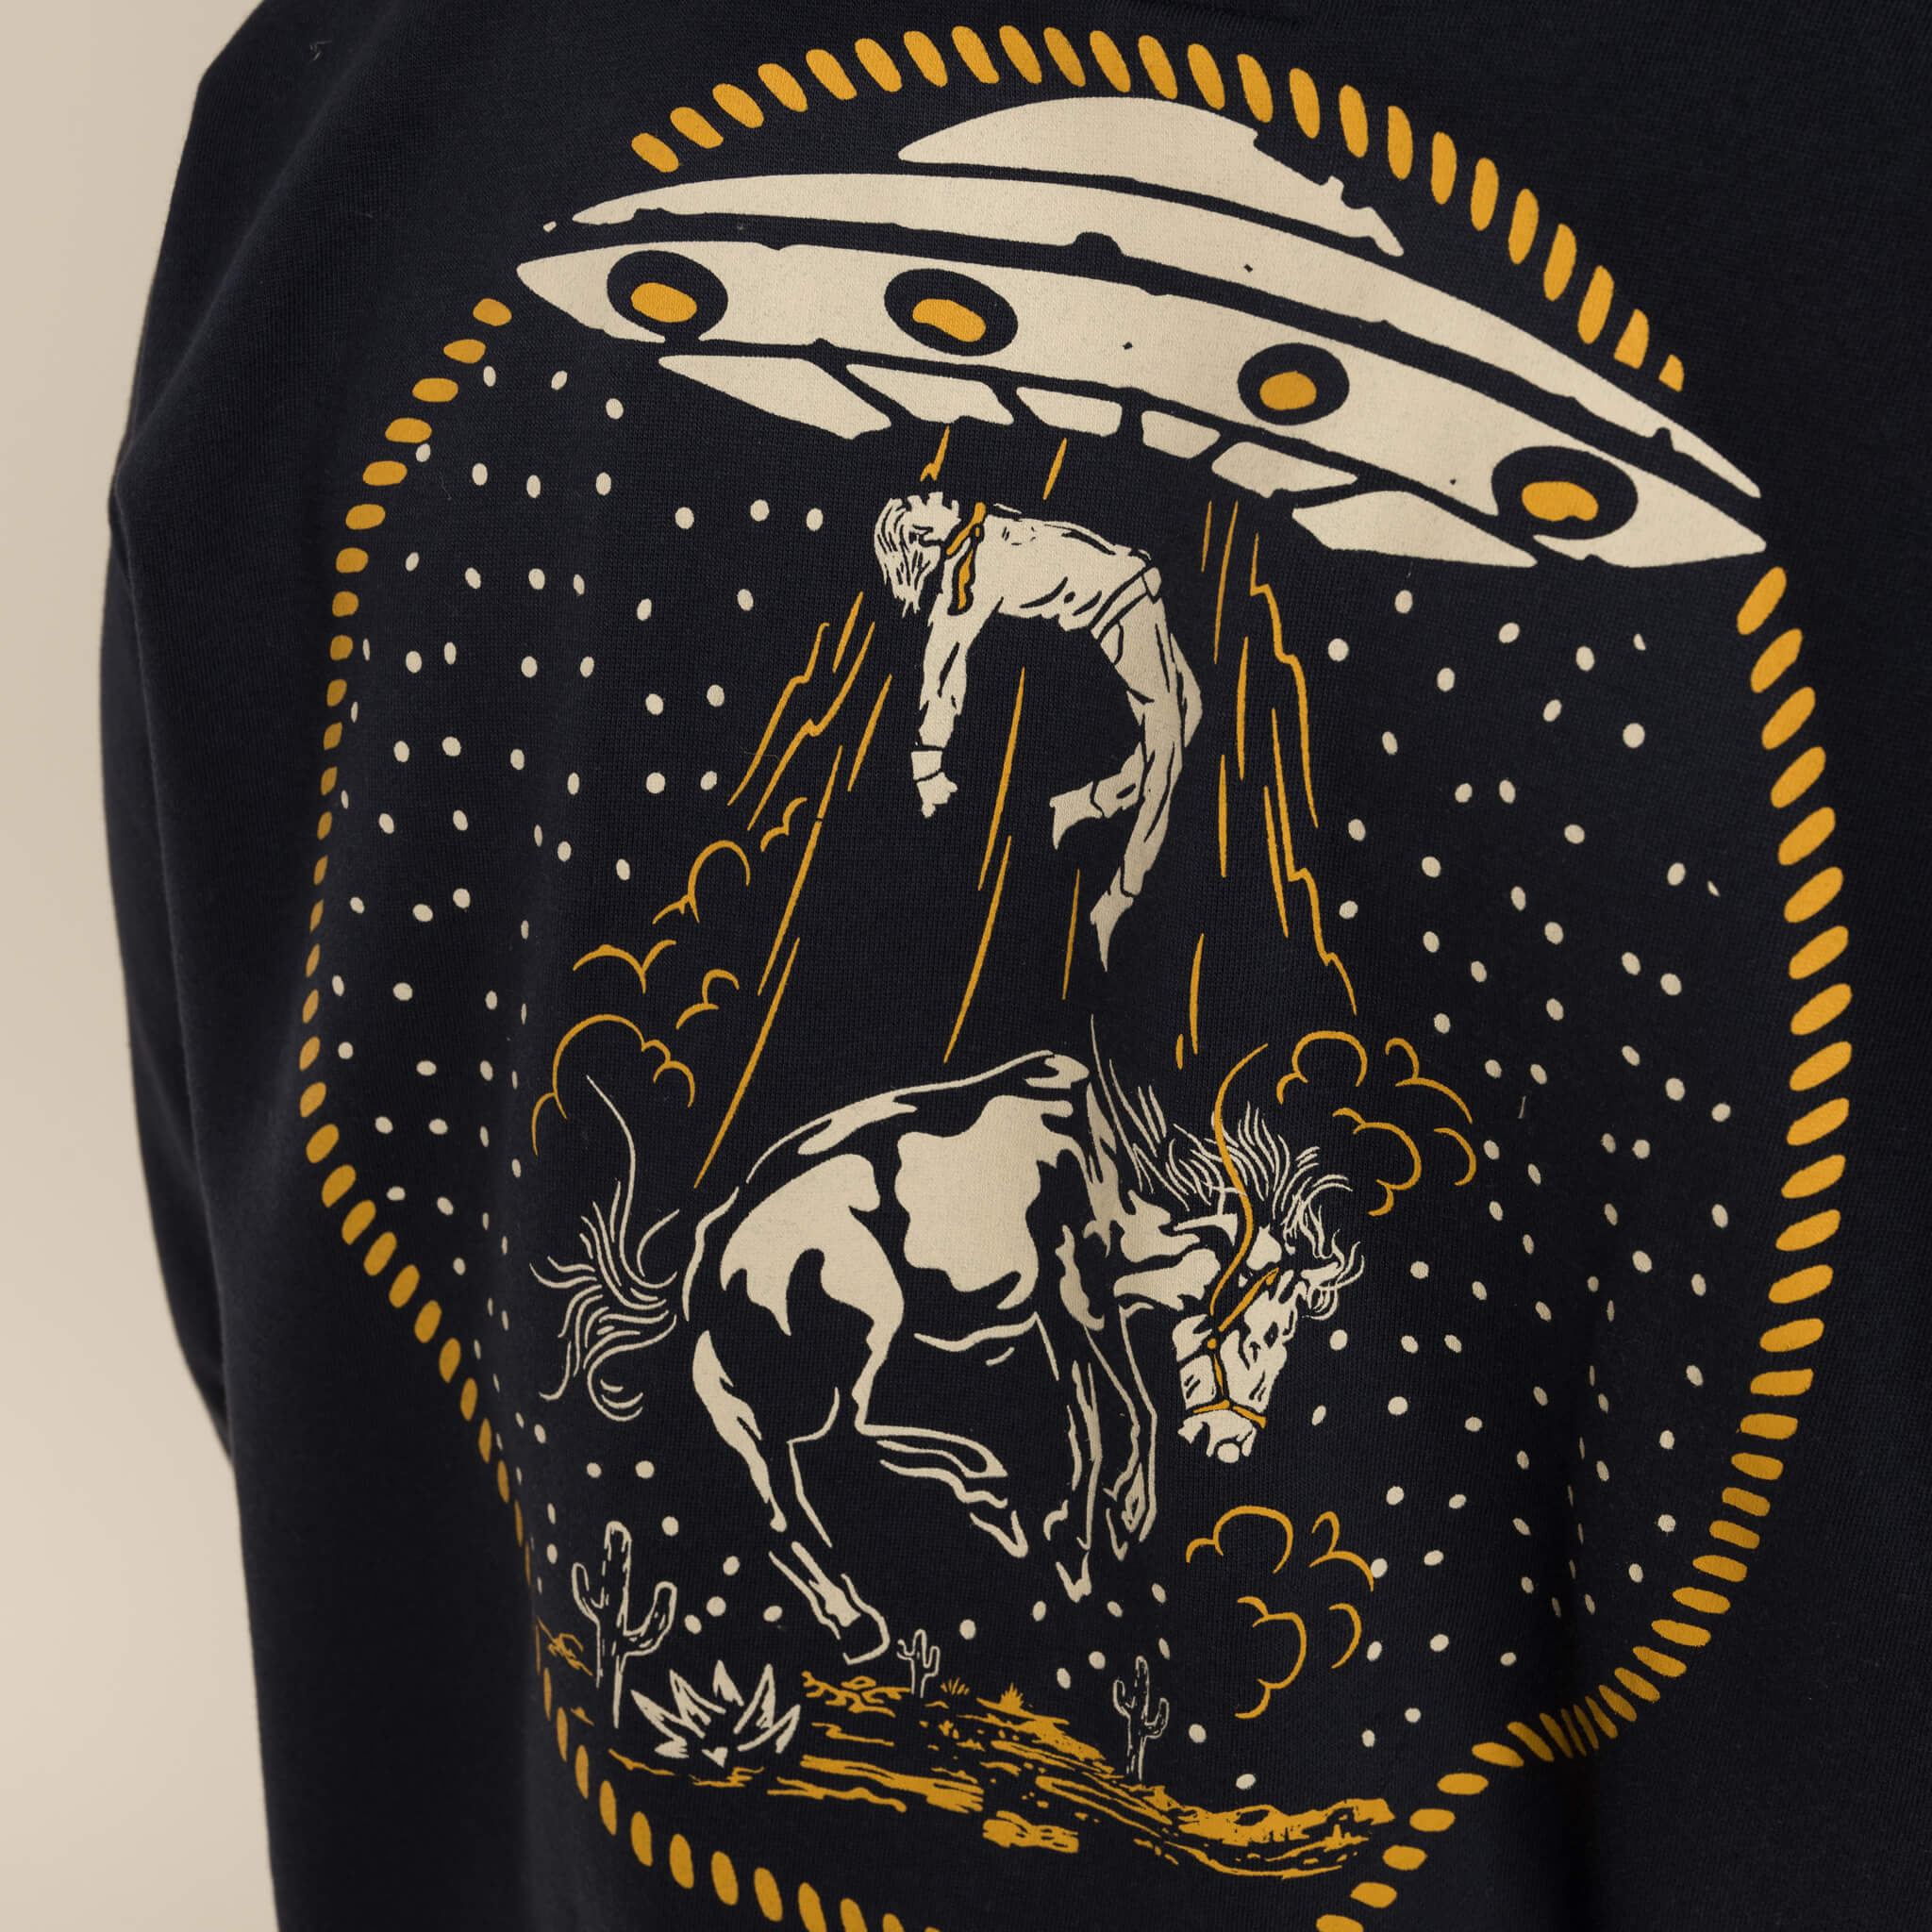 Charros & Aliens Sweatshirt